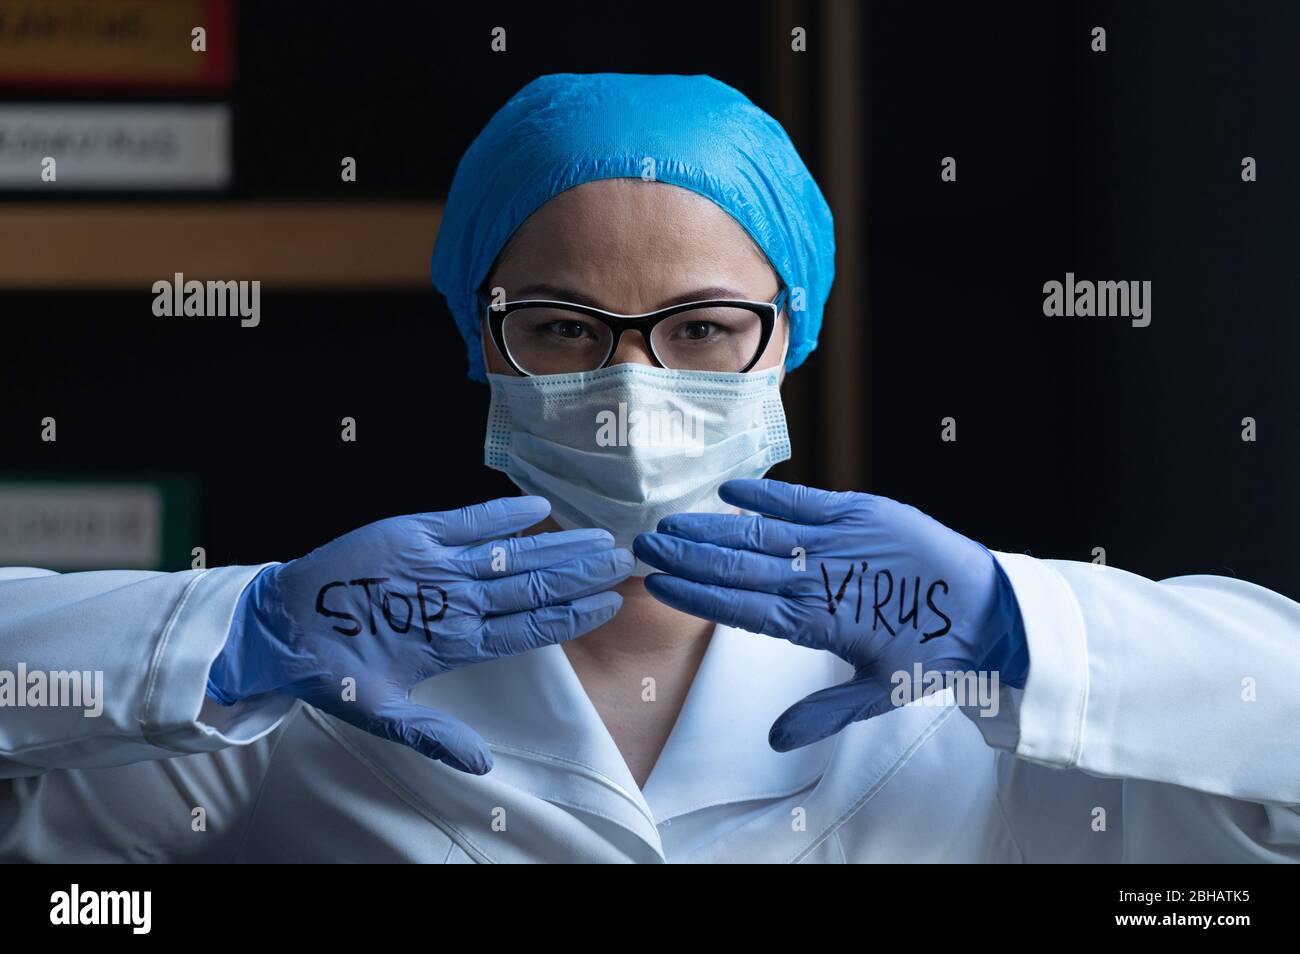 Doctor Saying STOP VIRUS Written On His Gloves. Stock Photo